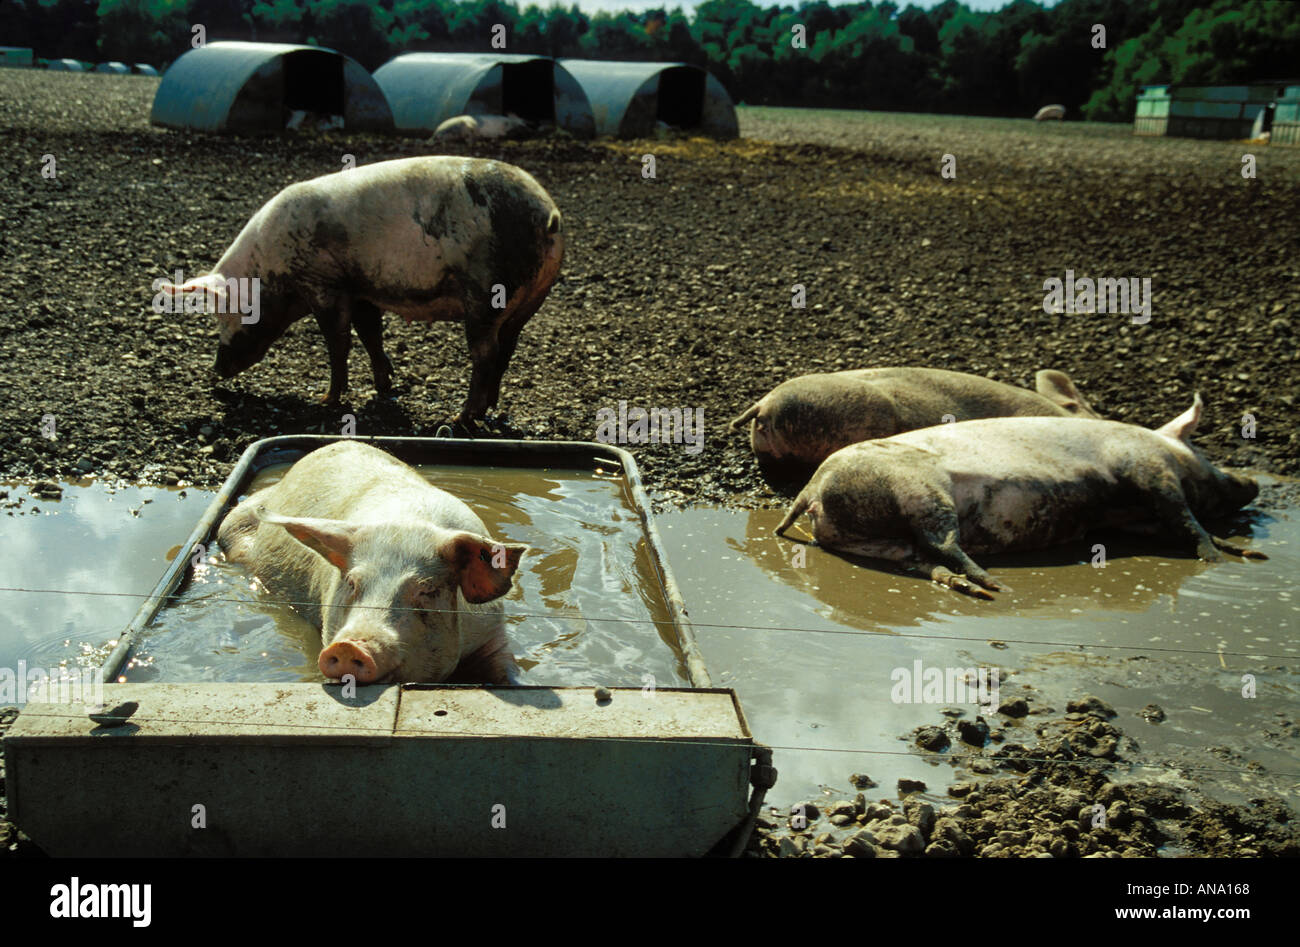 Animal farm - three pigs lying in mud outdoors, english countryside Stock Photo